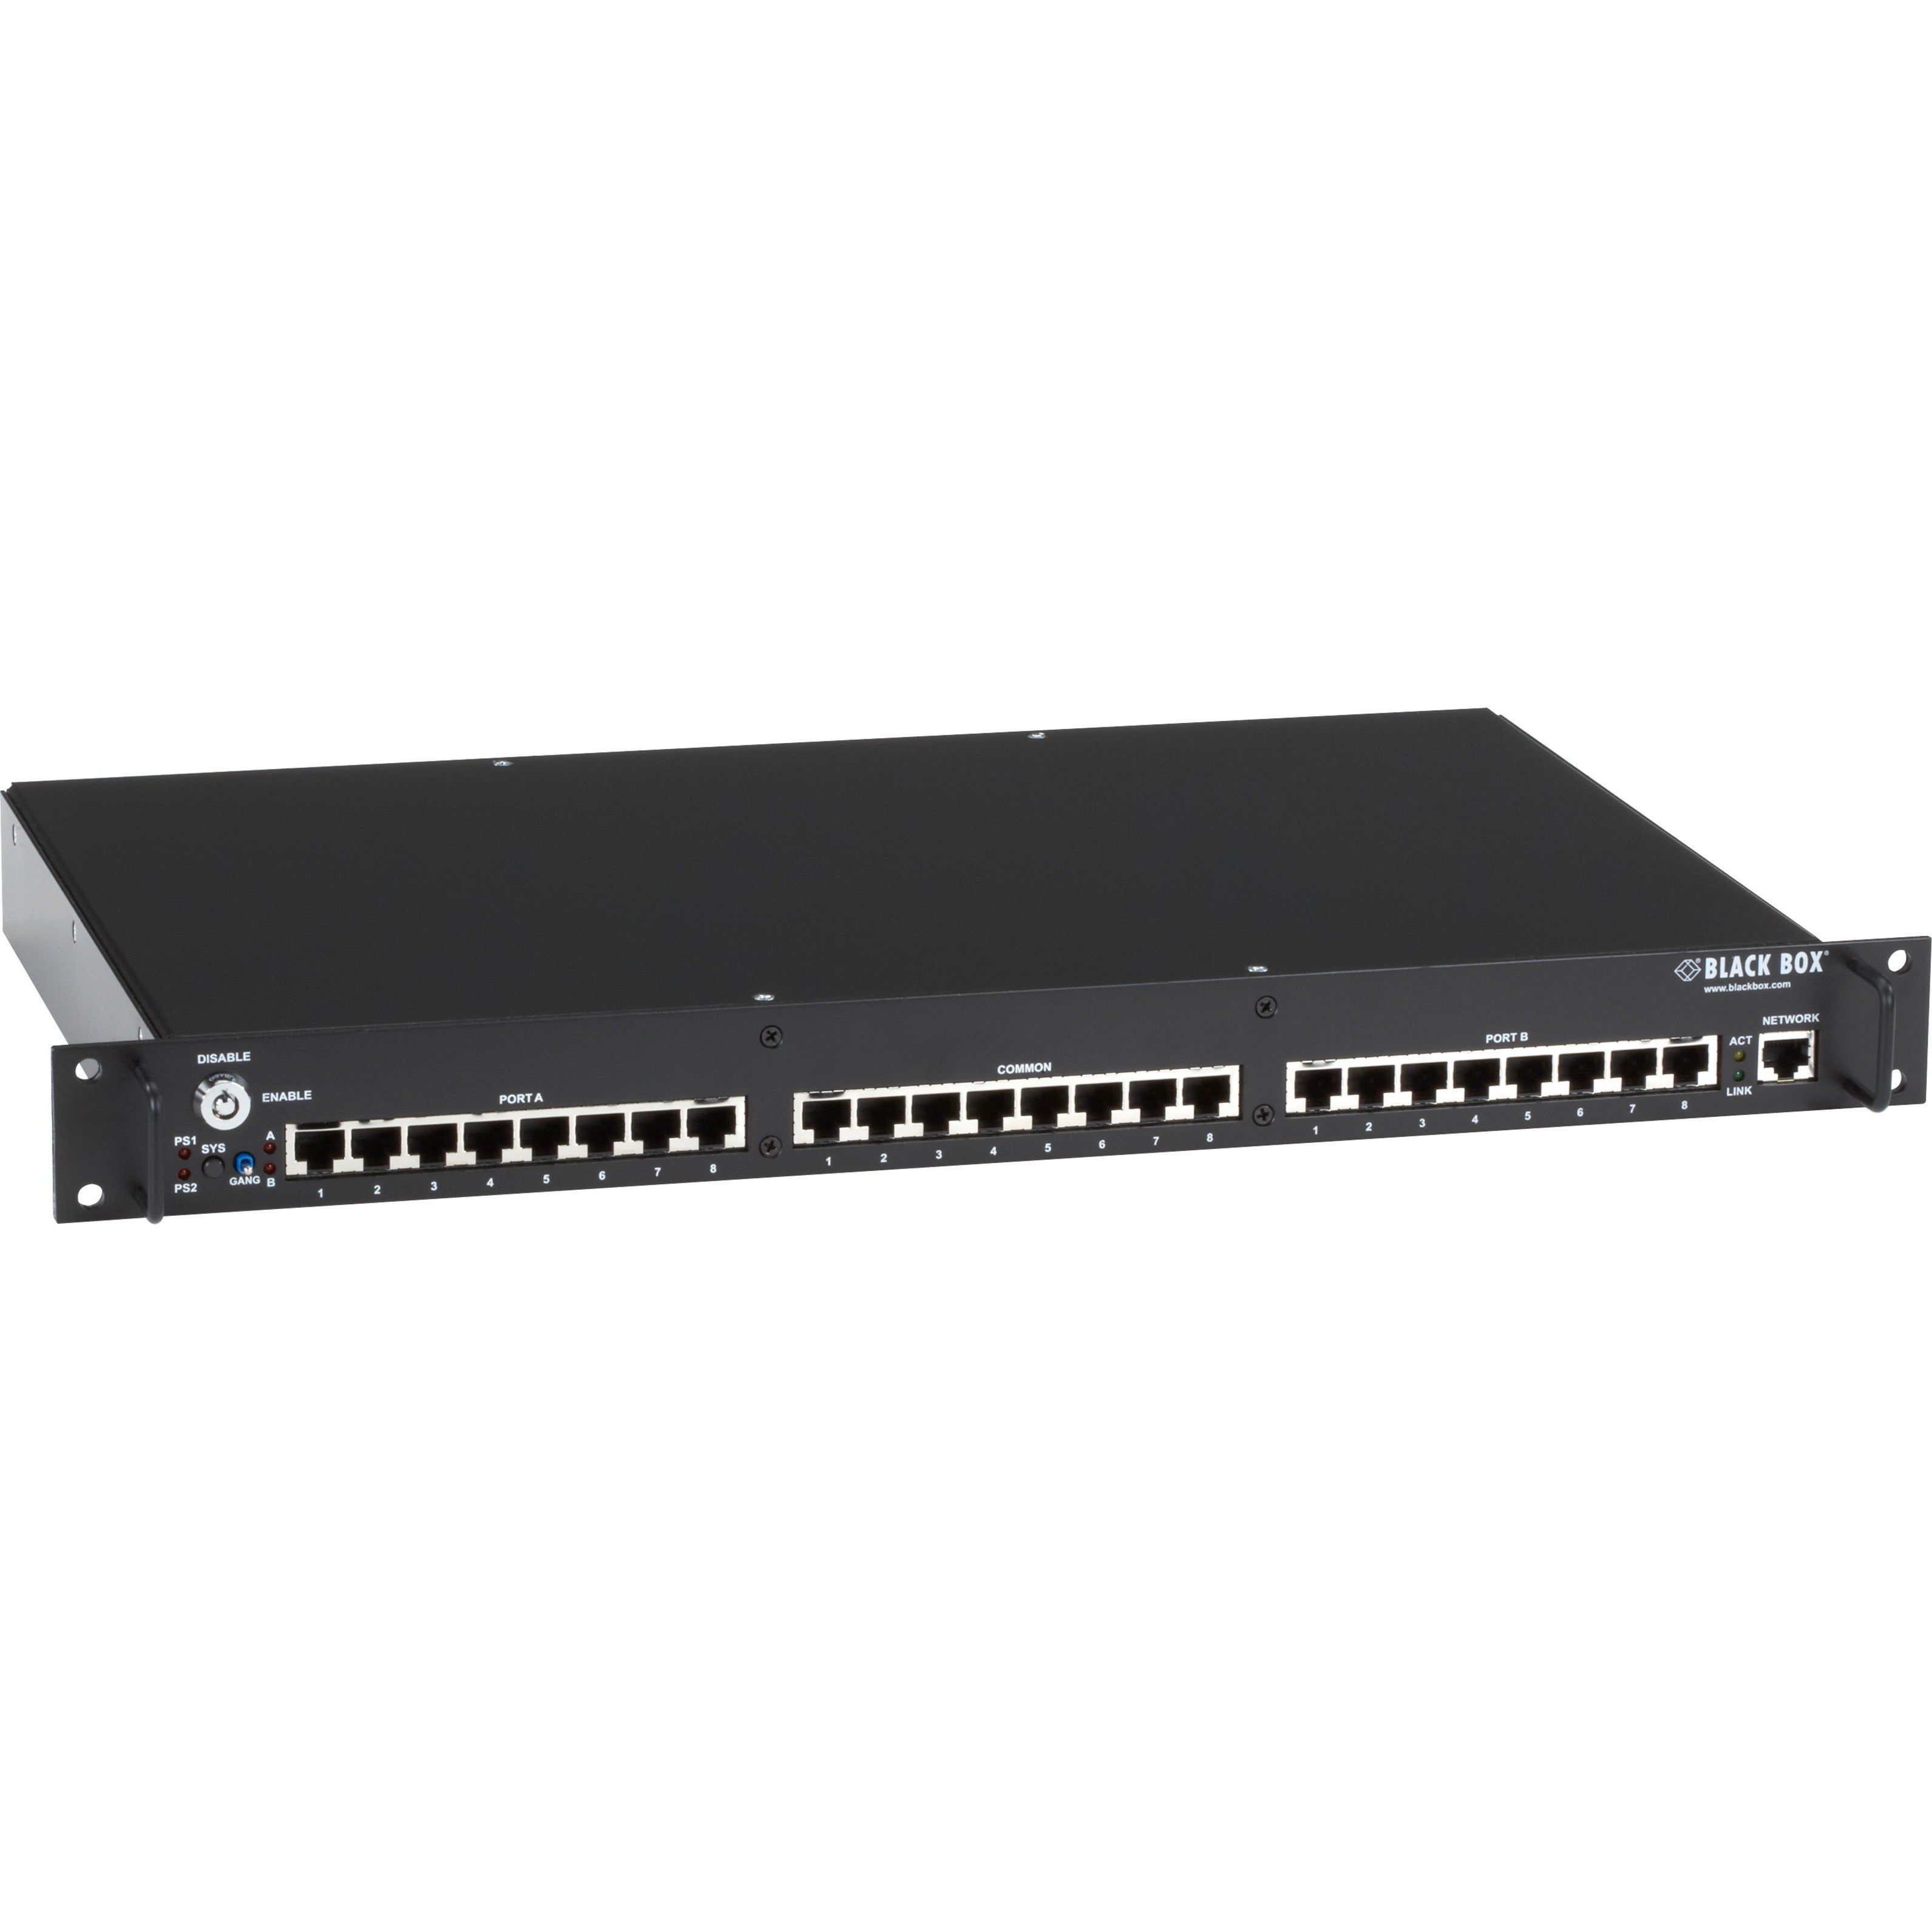 Black Box NBSALL8MGR Rackmount Gang Switch - 19, 1U, (8) RJ-45 A/B (All Pins), Network Manageable